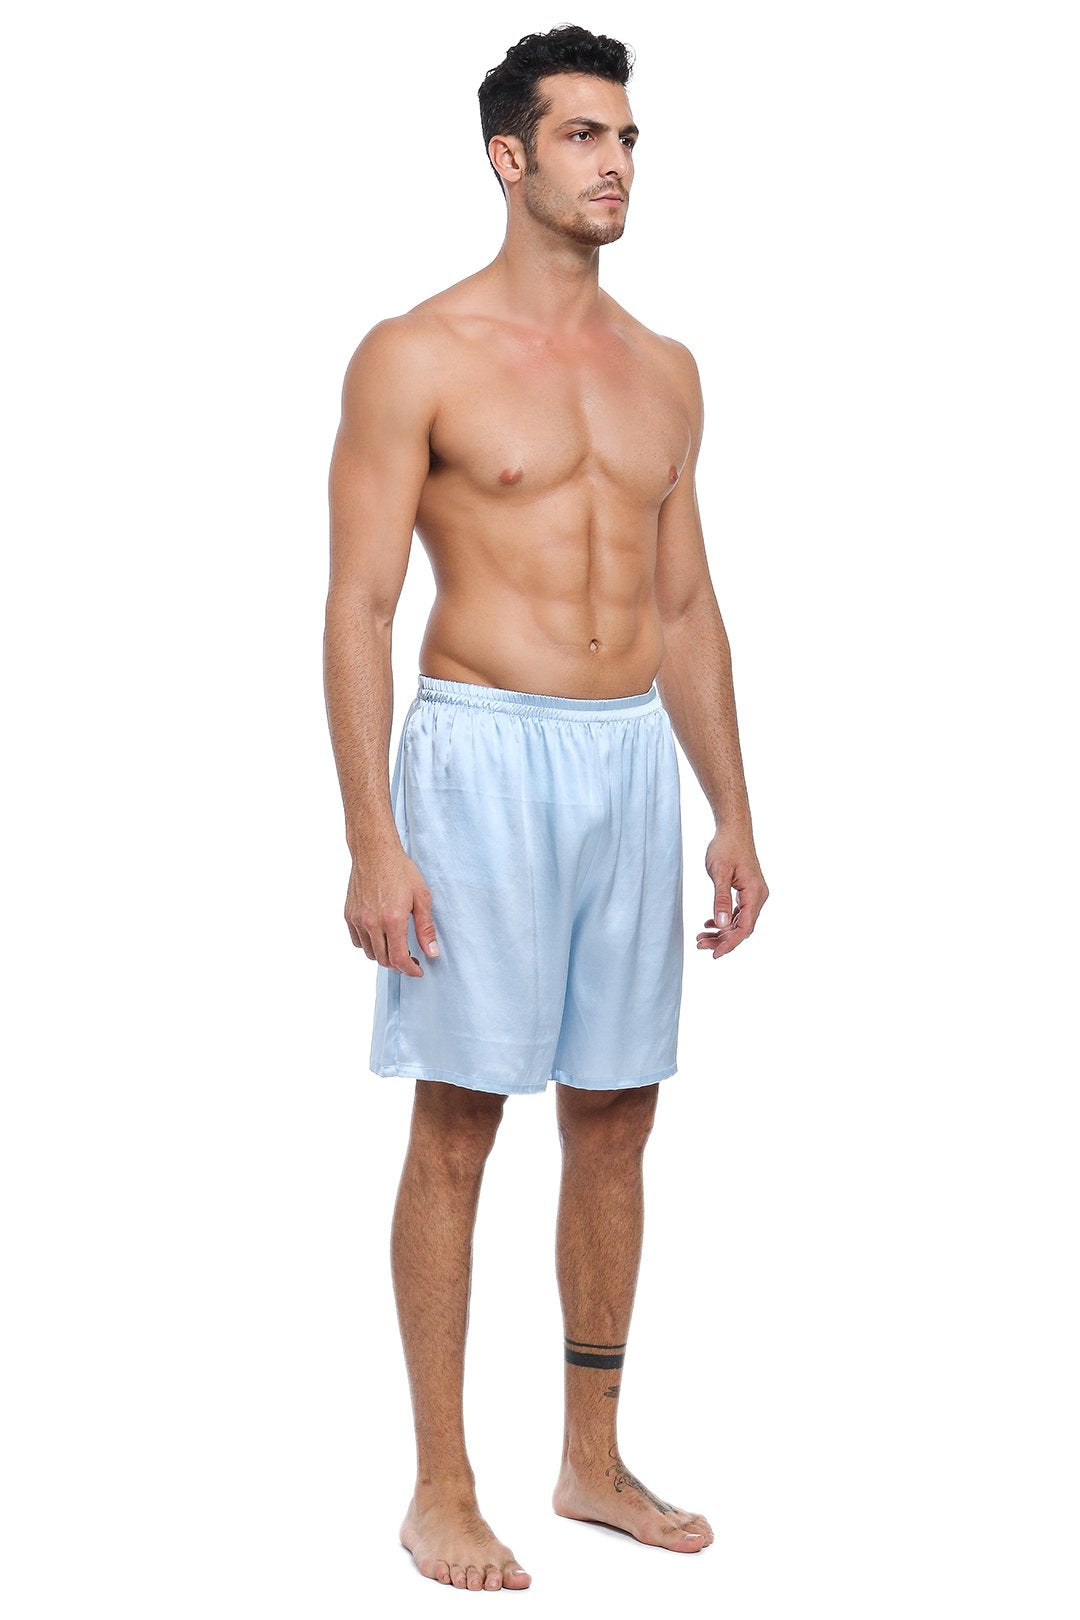 PULLIN - Copacabana Men's Fashion 2 Boxer Shorts, Multicoloured